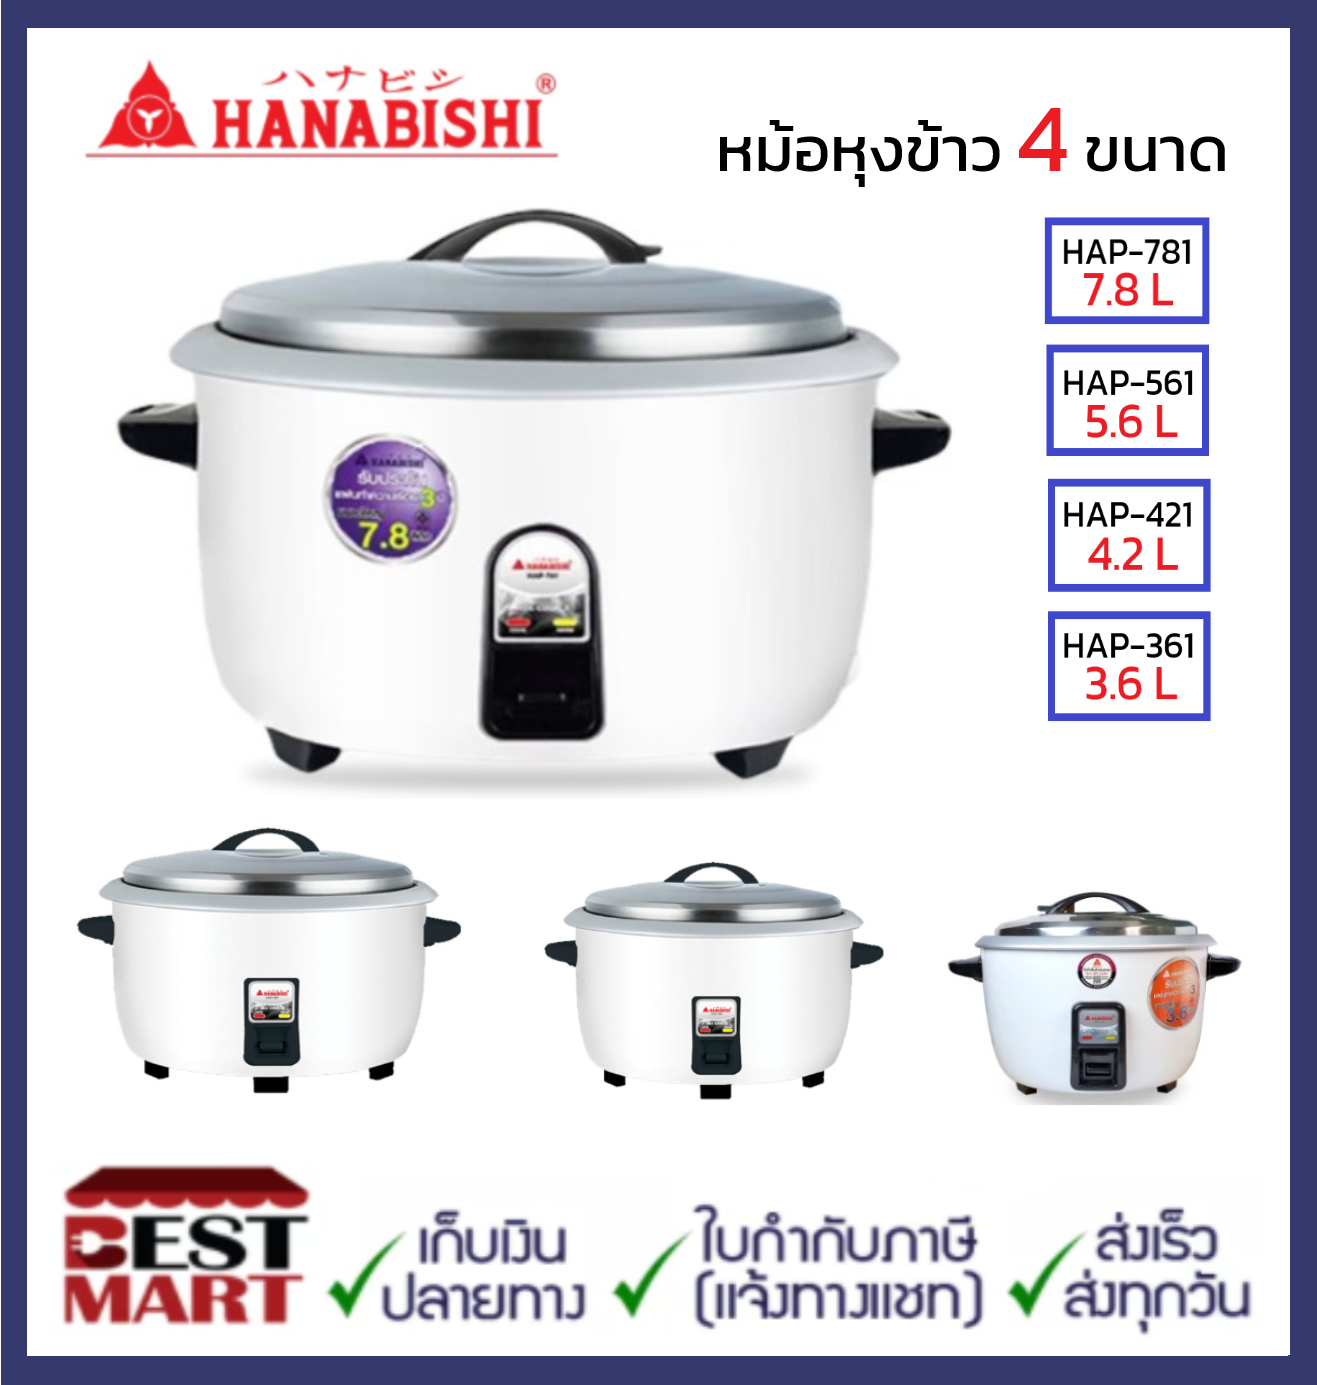 THB Sharp Commercial Big Rice Cooker 10 Liters KSH D1010